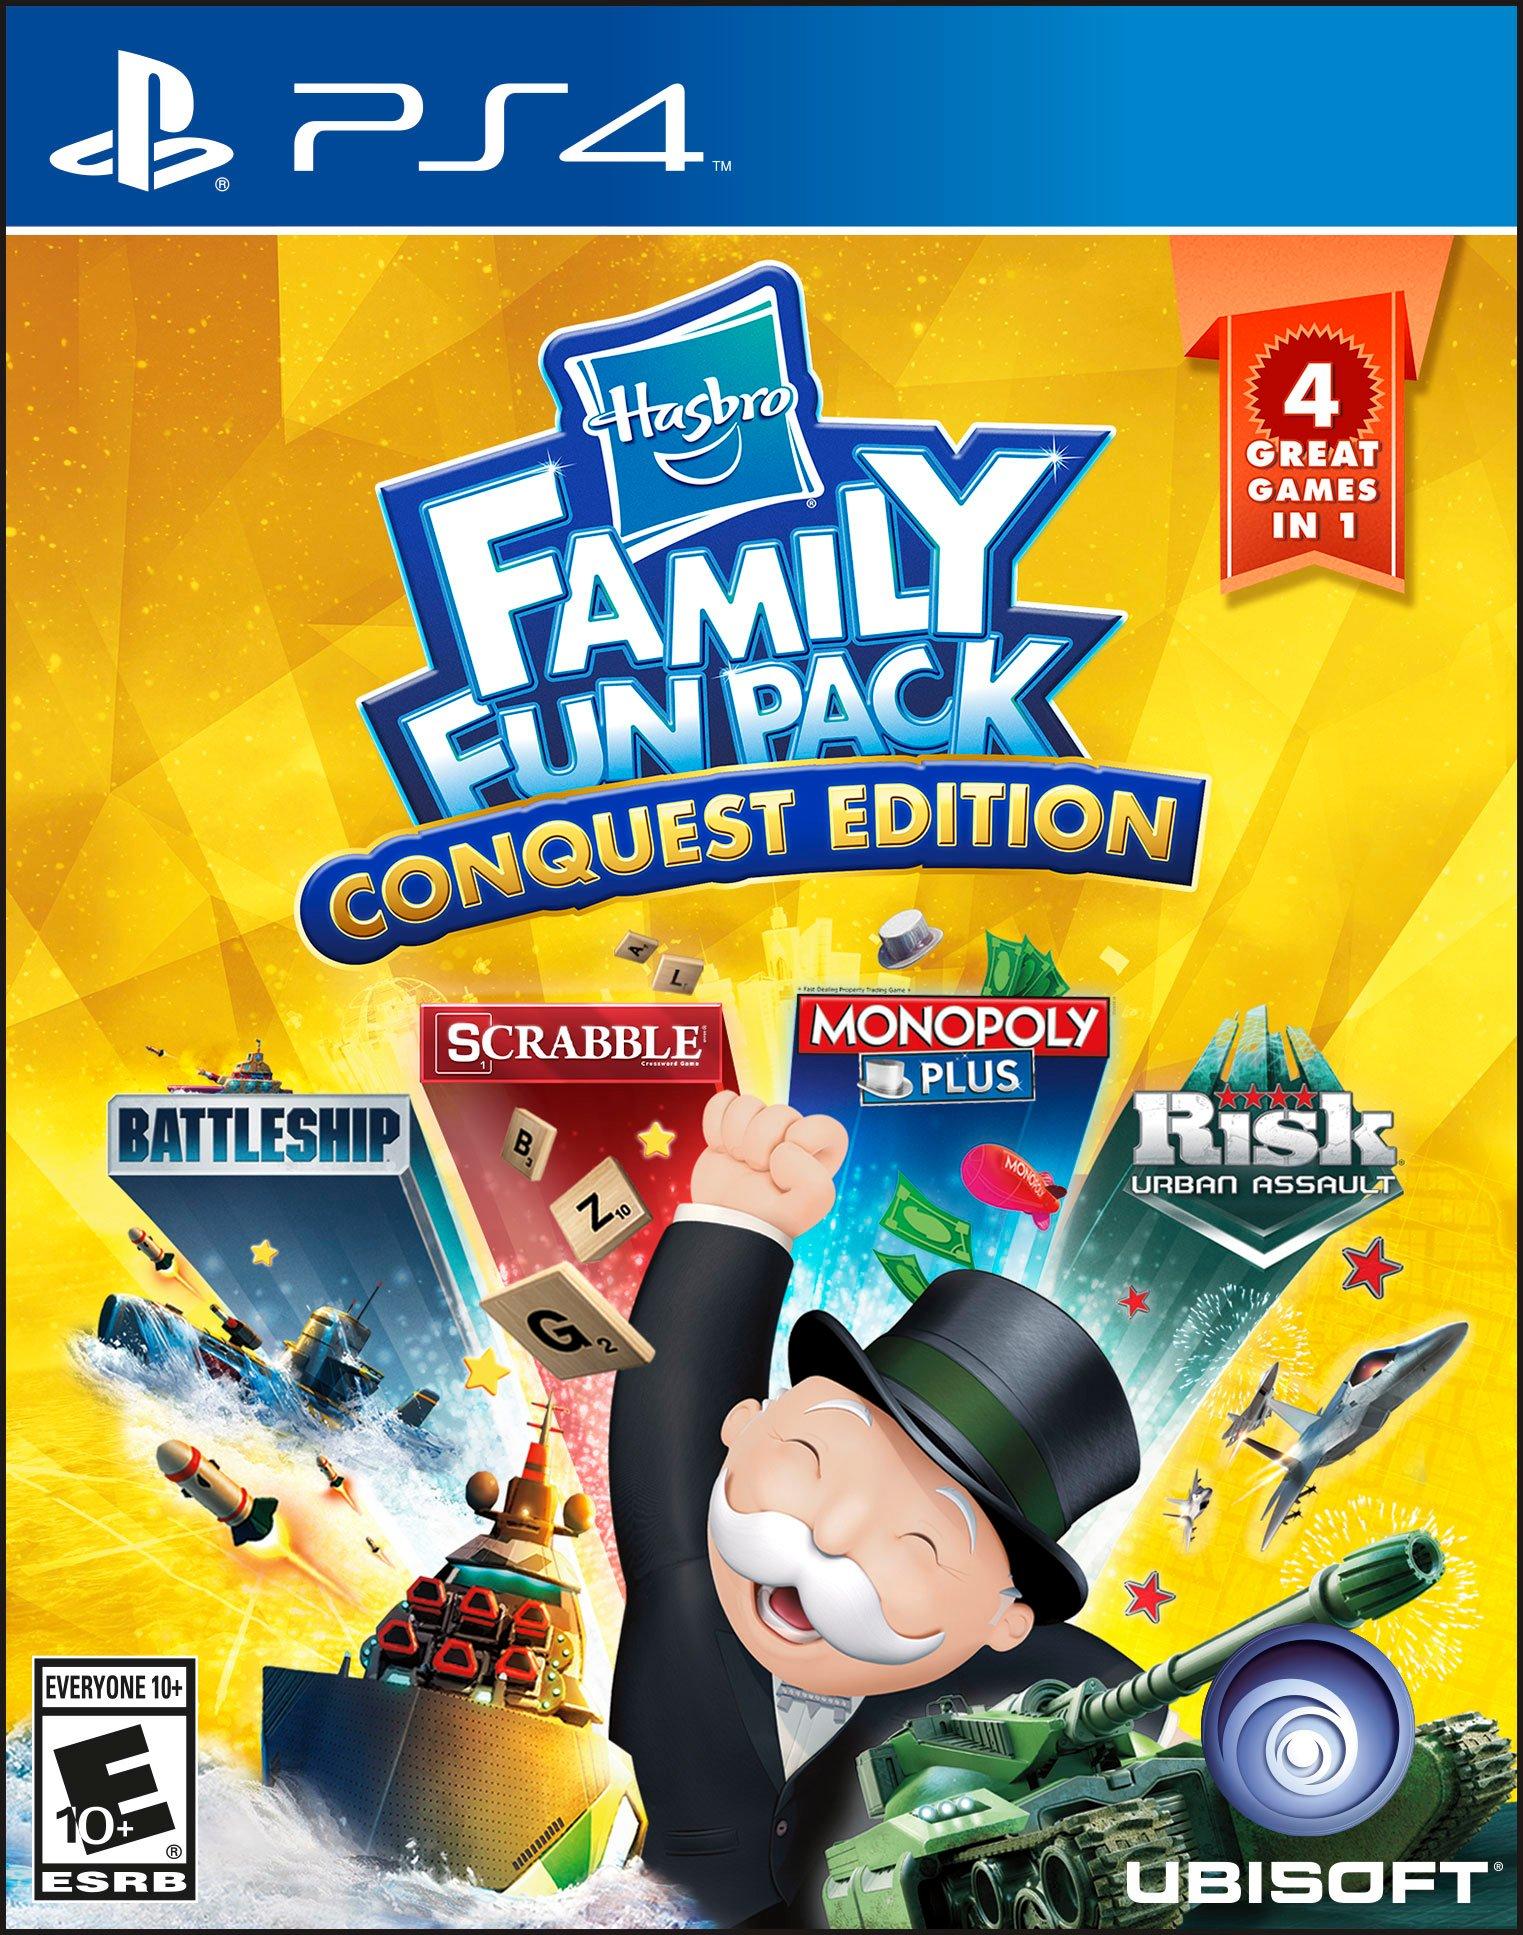 sav delikatesse Anoi Hasbro Family Fun Pack Conquest Edition - PlayStation 4 | PlayStation 4 |  GameStop